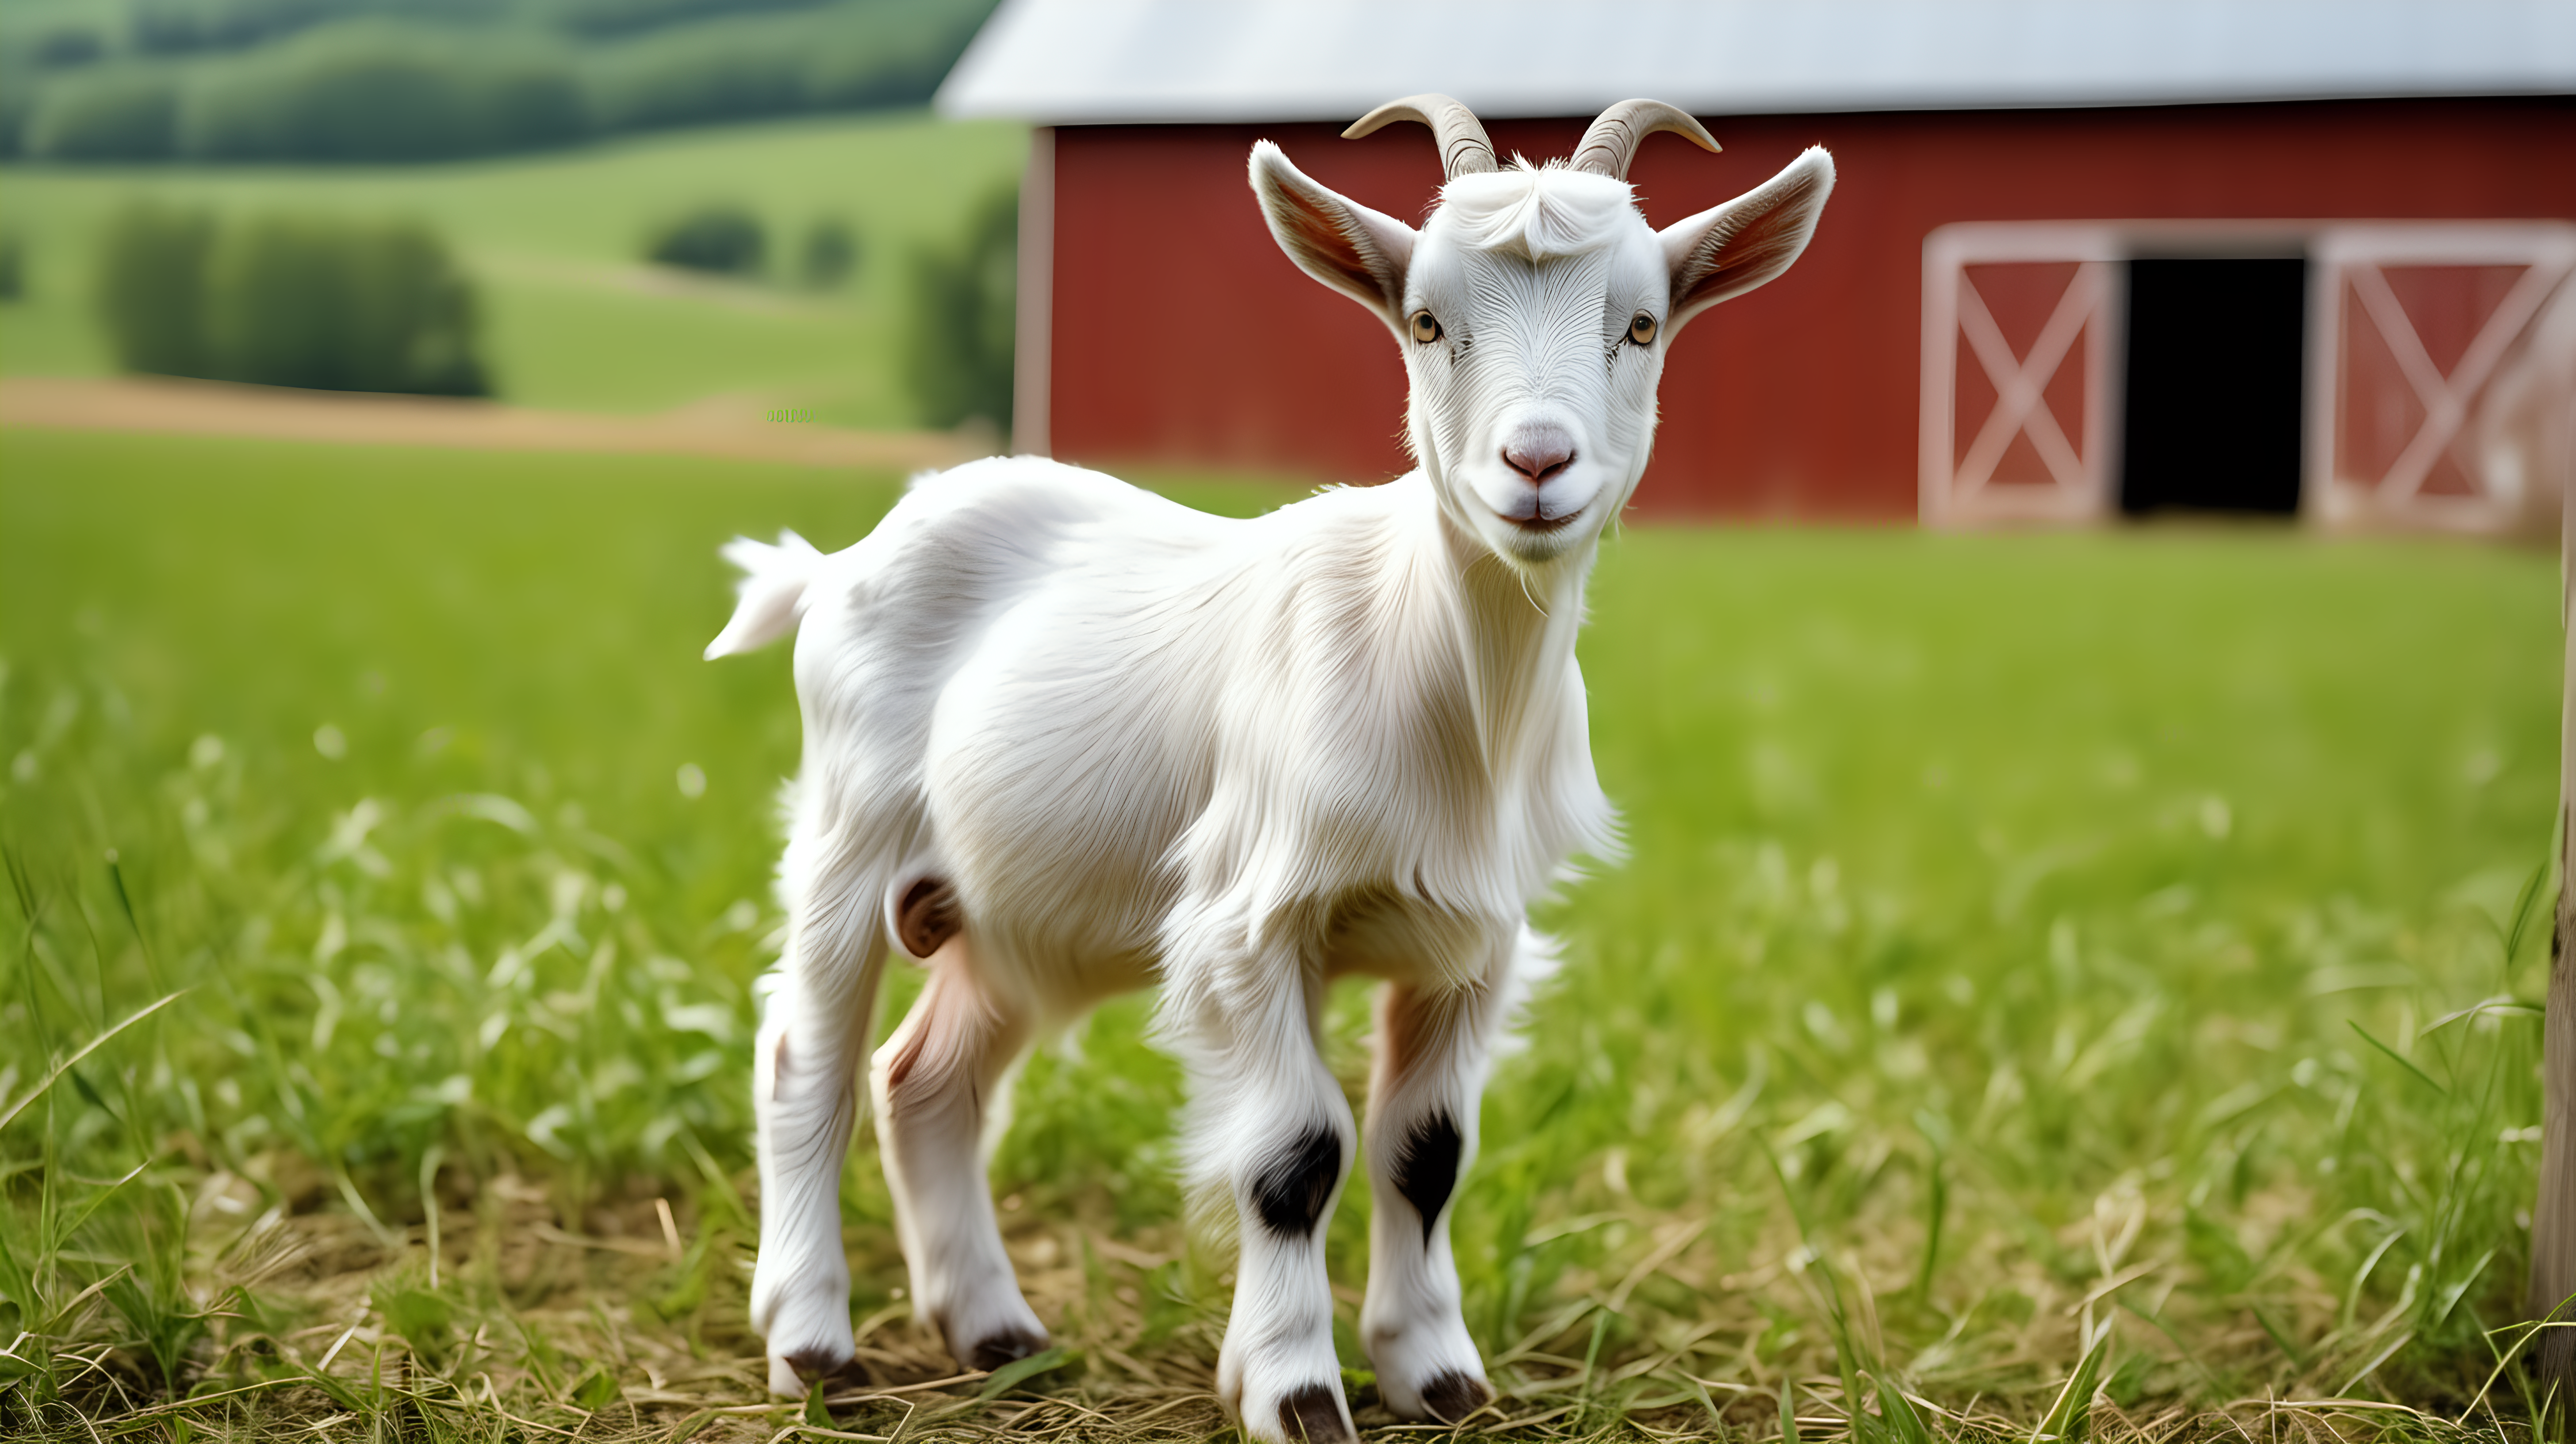 little goat in feild, farm barn background, isolated on background